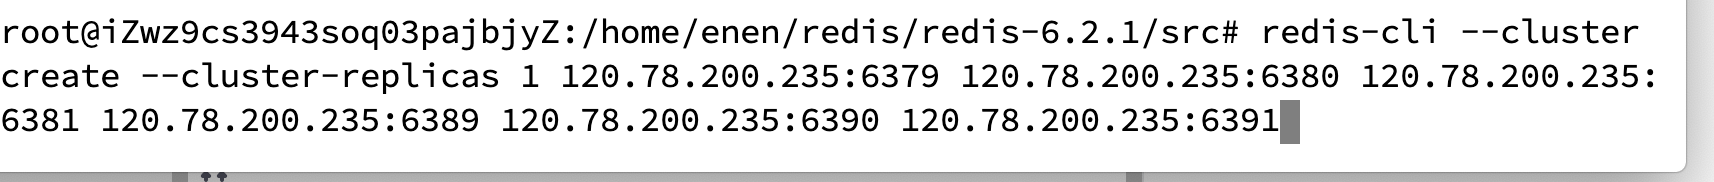 redis-cli --cluster create --cluster-replicas 1 120.78.200.235:6379 120.78.200.235:6380 120.78.200.235:6381 120.78.200.235:6389 120.78.200.235:6390 120.78.200.235:6391